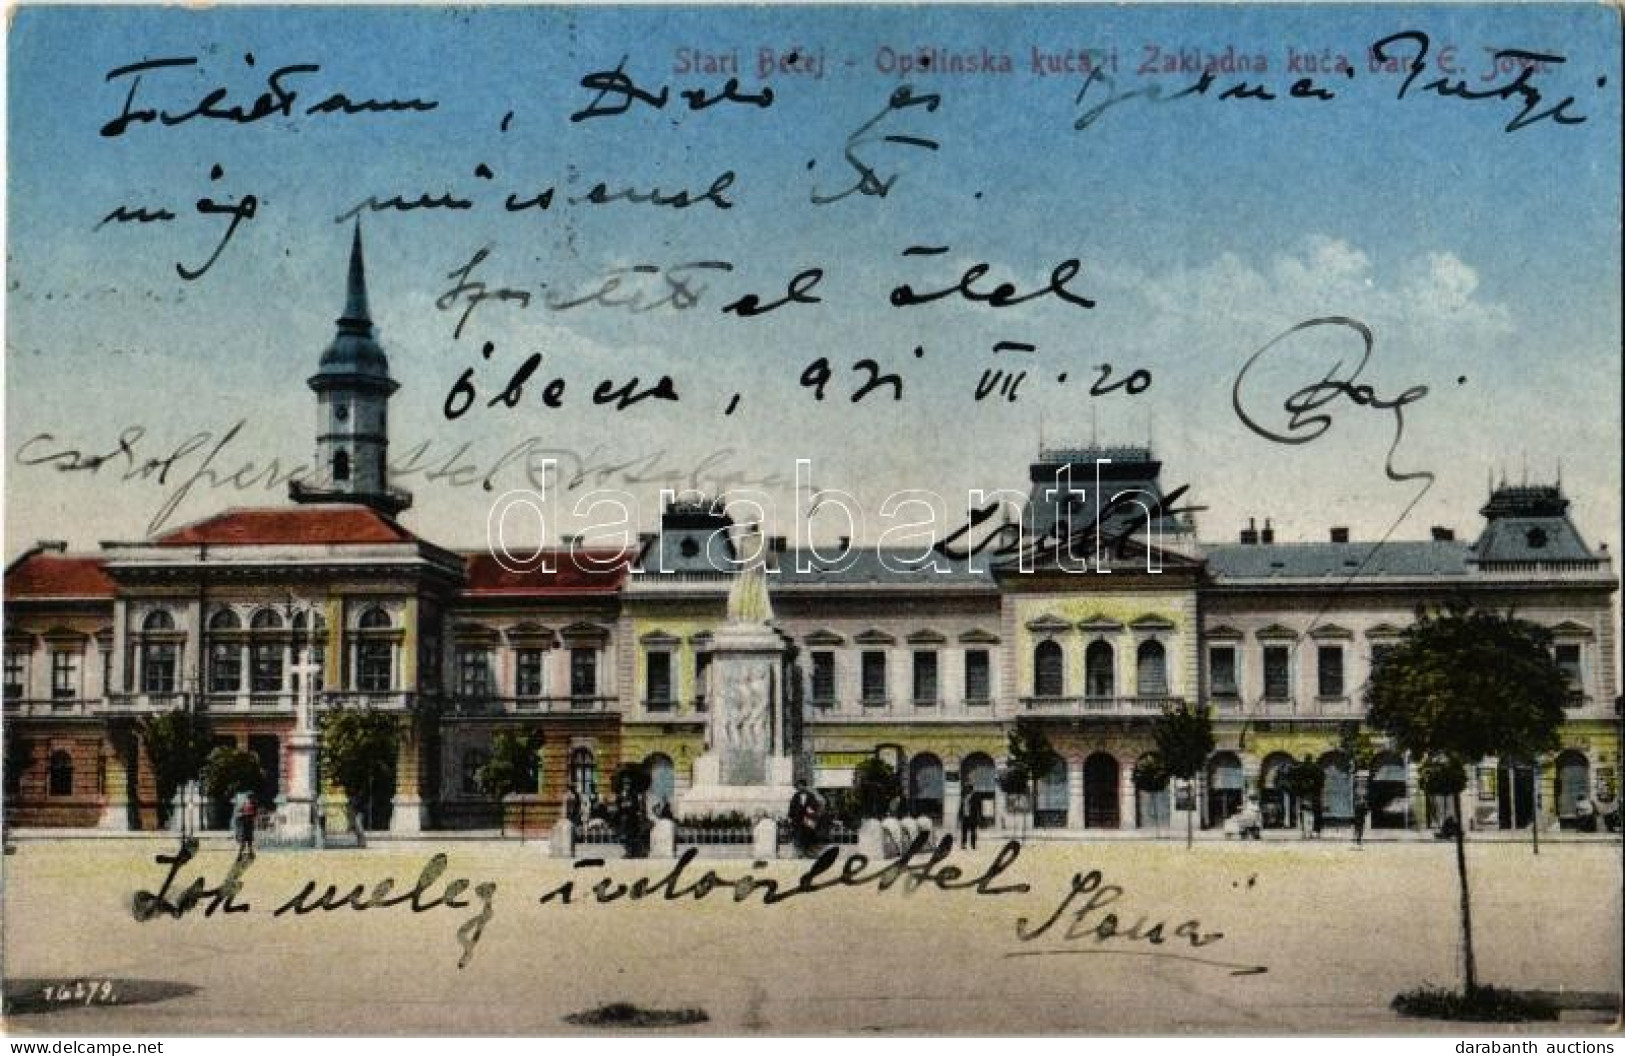 T2 1921 Óbecse, Stari Becej; Városháza / Opstínska Kuca I Zakladna Kuca, Bar E. Jovic / Town Hall, Shops - Unclassified